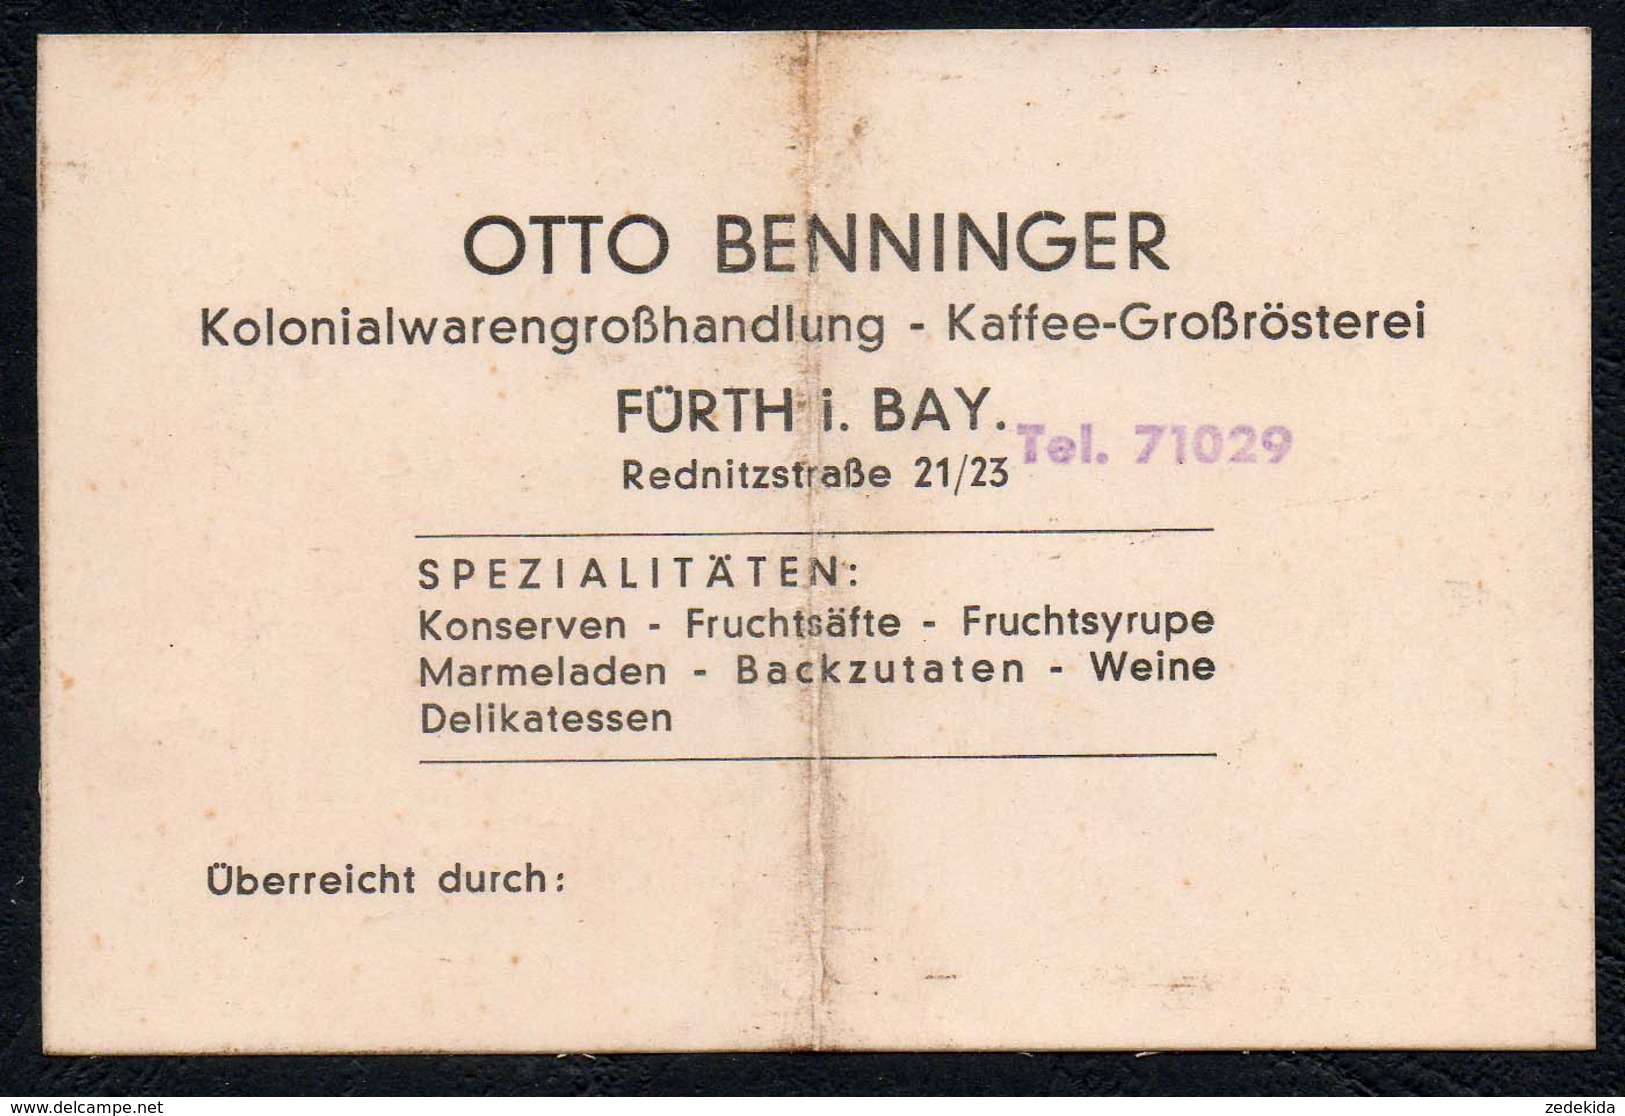 C3773 - Otto Benninger - Kaffe Rösterei Kolonialwaren - Fürth - Visitenkarten